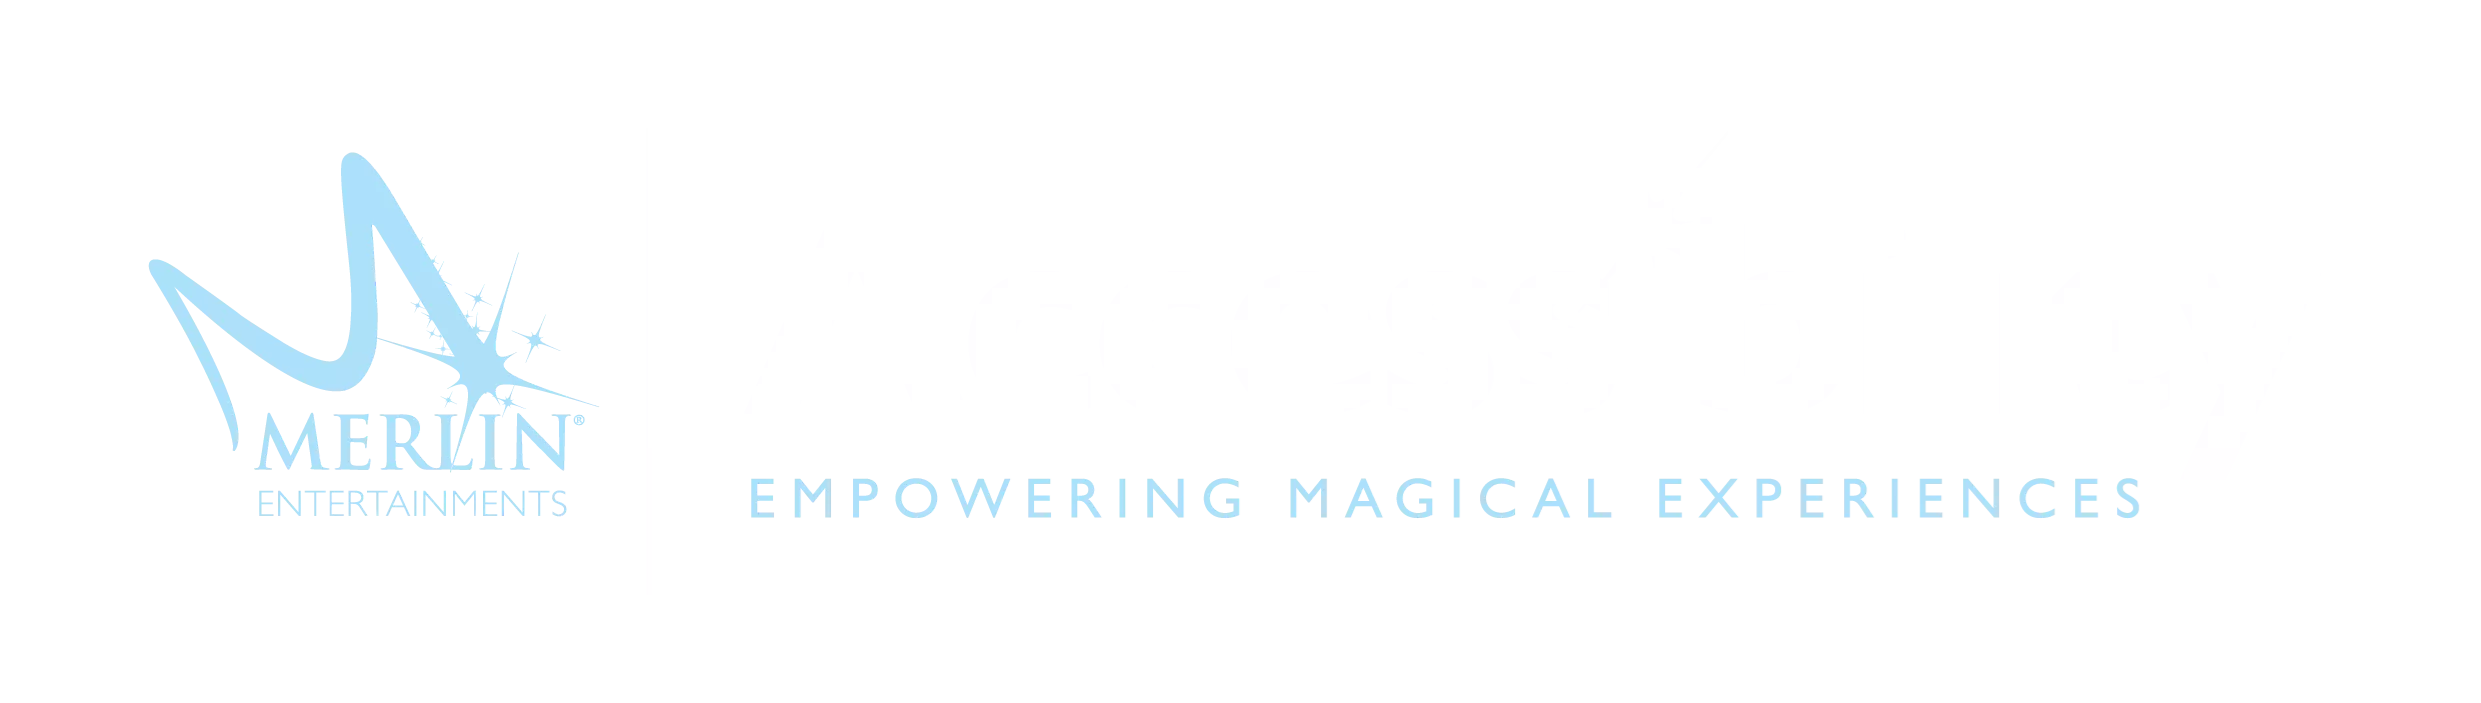 Merlin Accessibility Logo Transparent